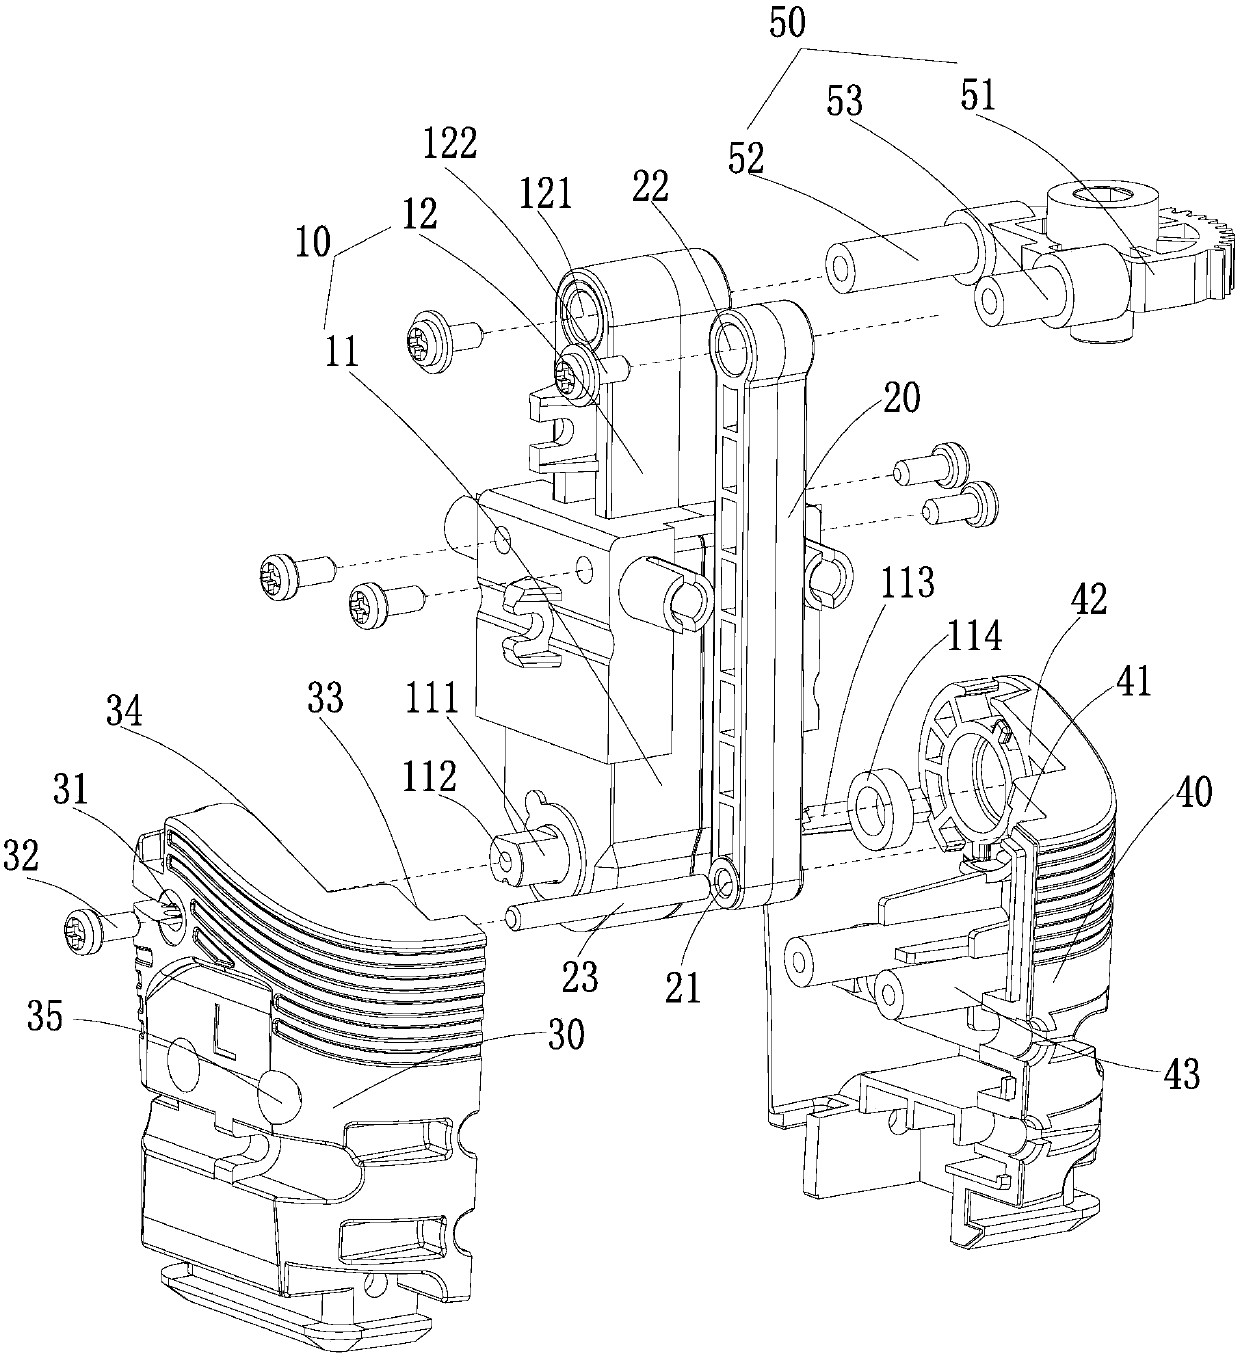 Steering engine transmission structure, robot framework structure and robot